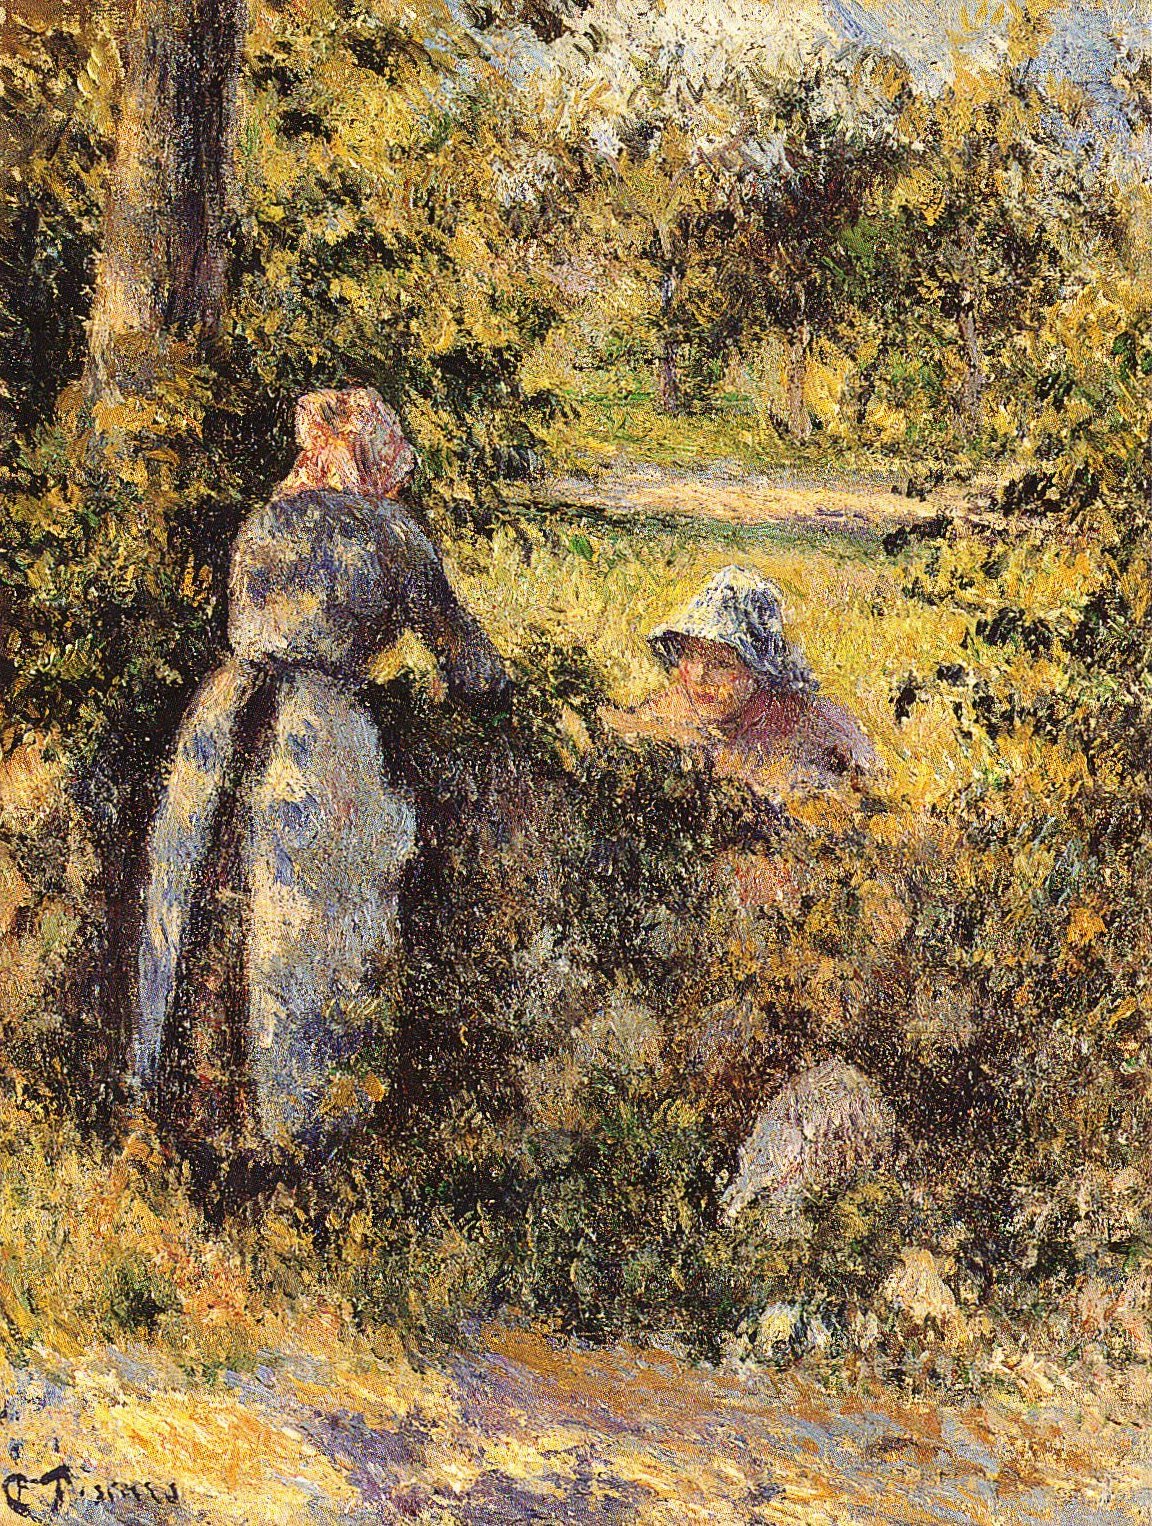 Camille+Pissarro-1830-1903 (342).jpg